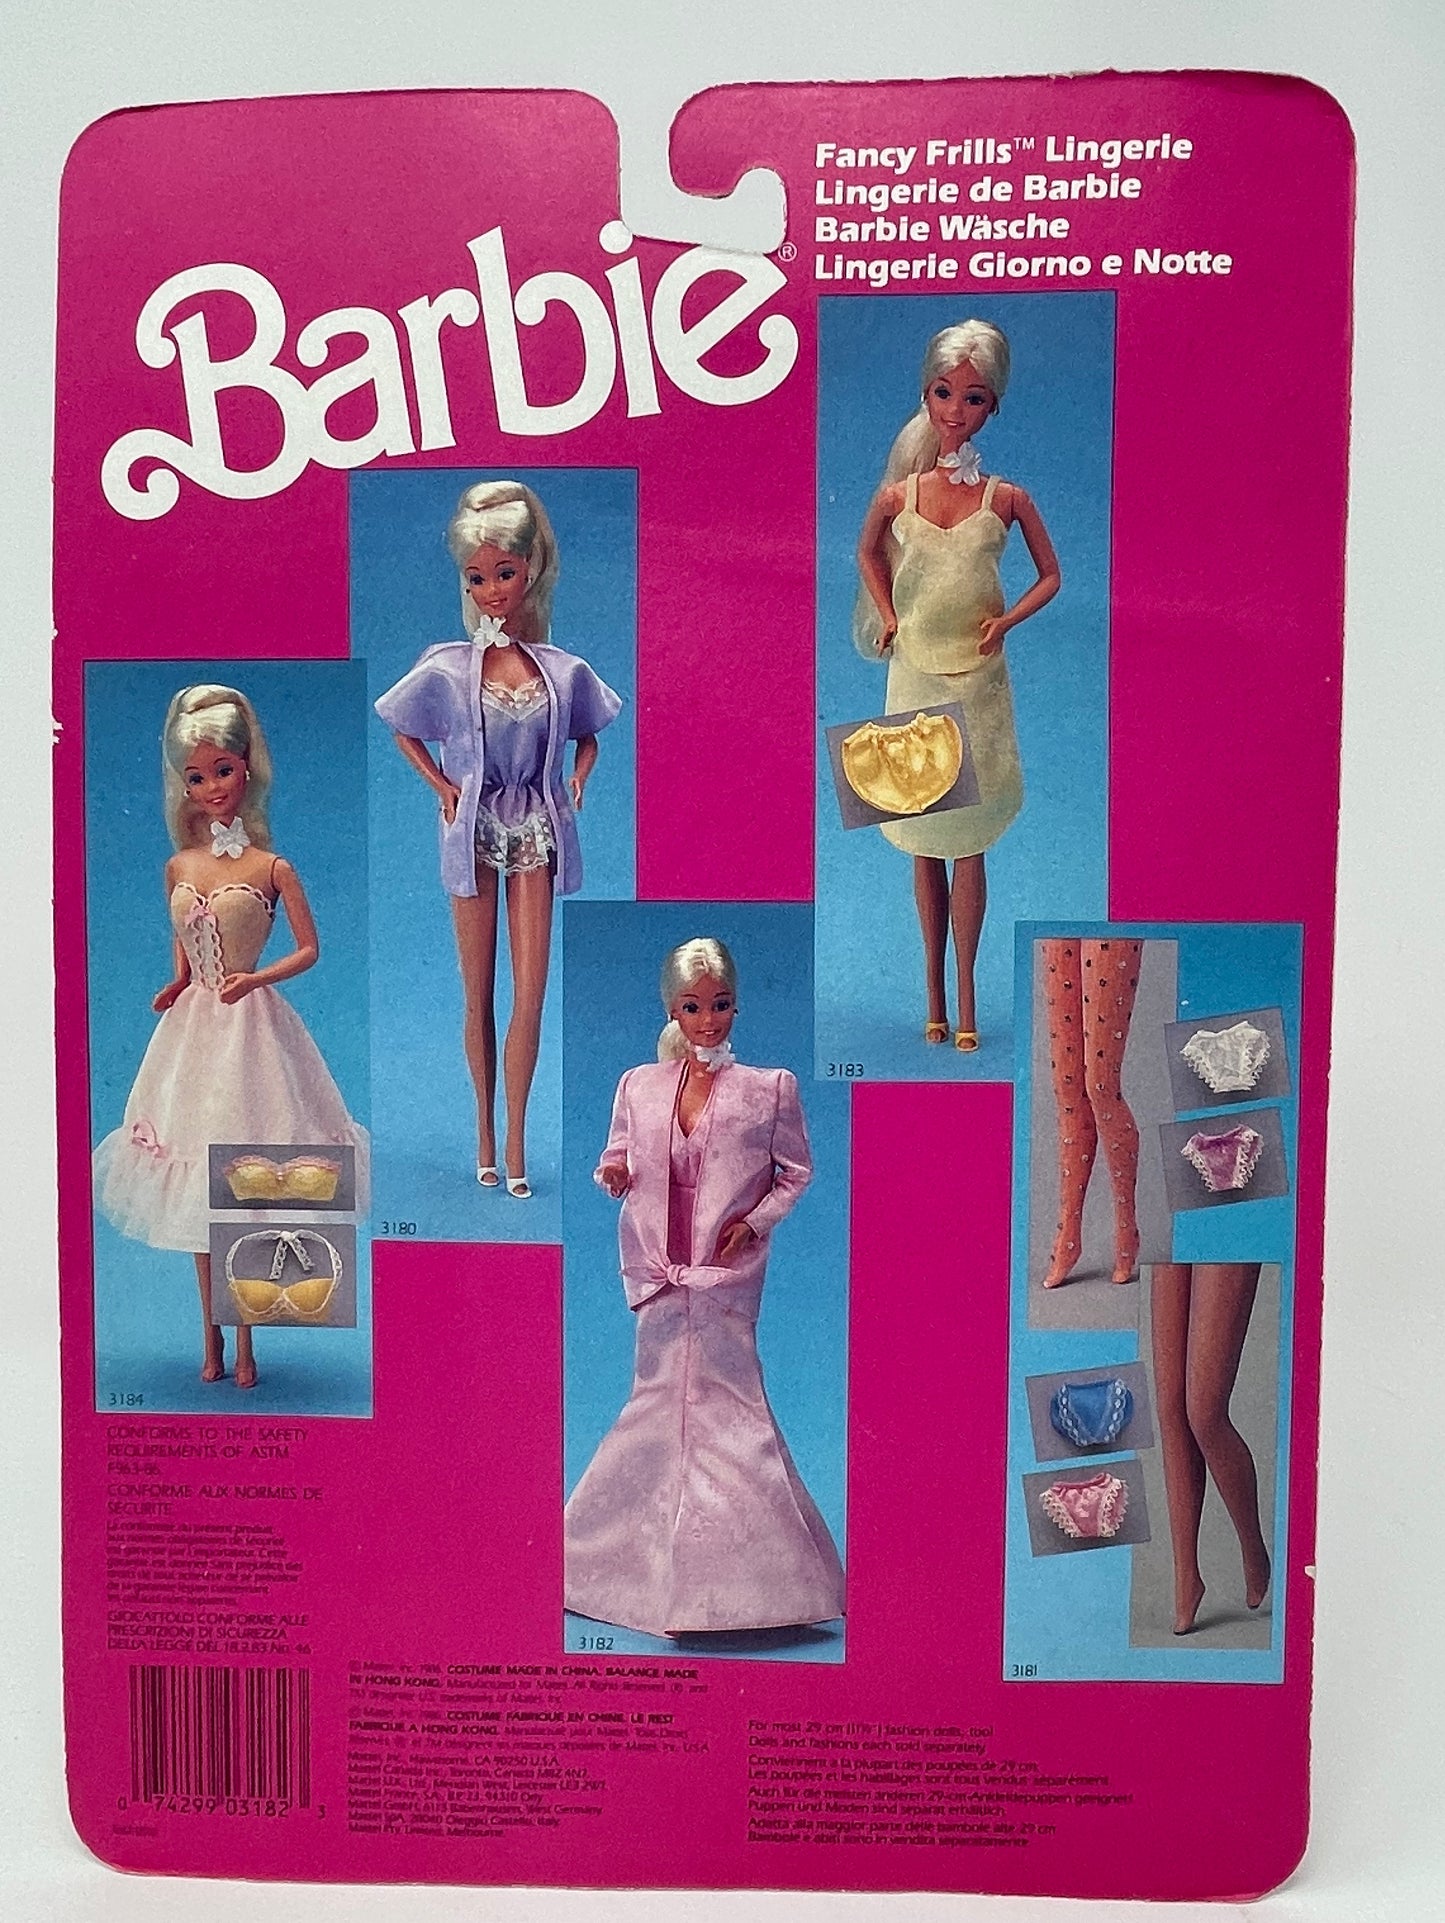 BARBIE - FANCY FRILLS LINGERIE - PINK NIGHTGOWN #3182 - MATTEL 1986